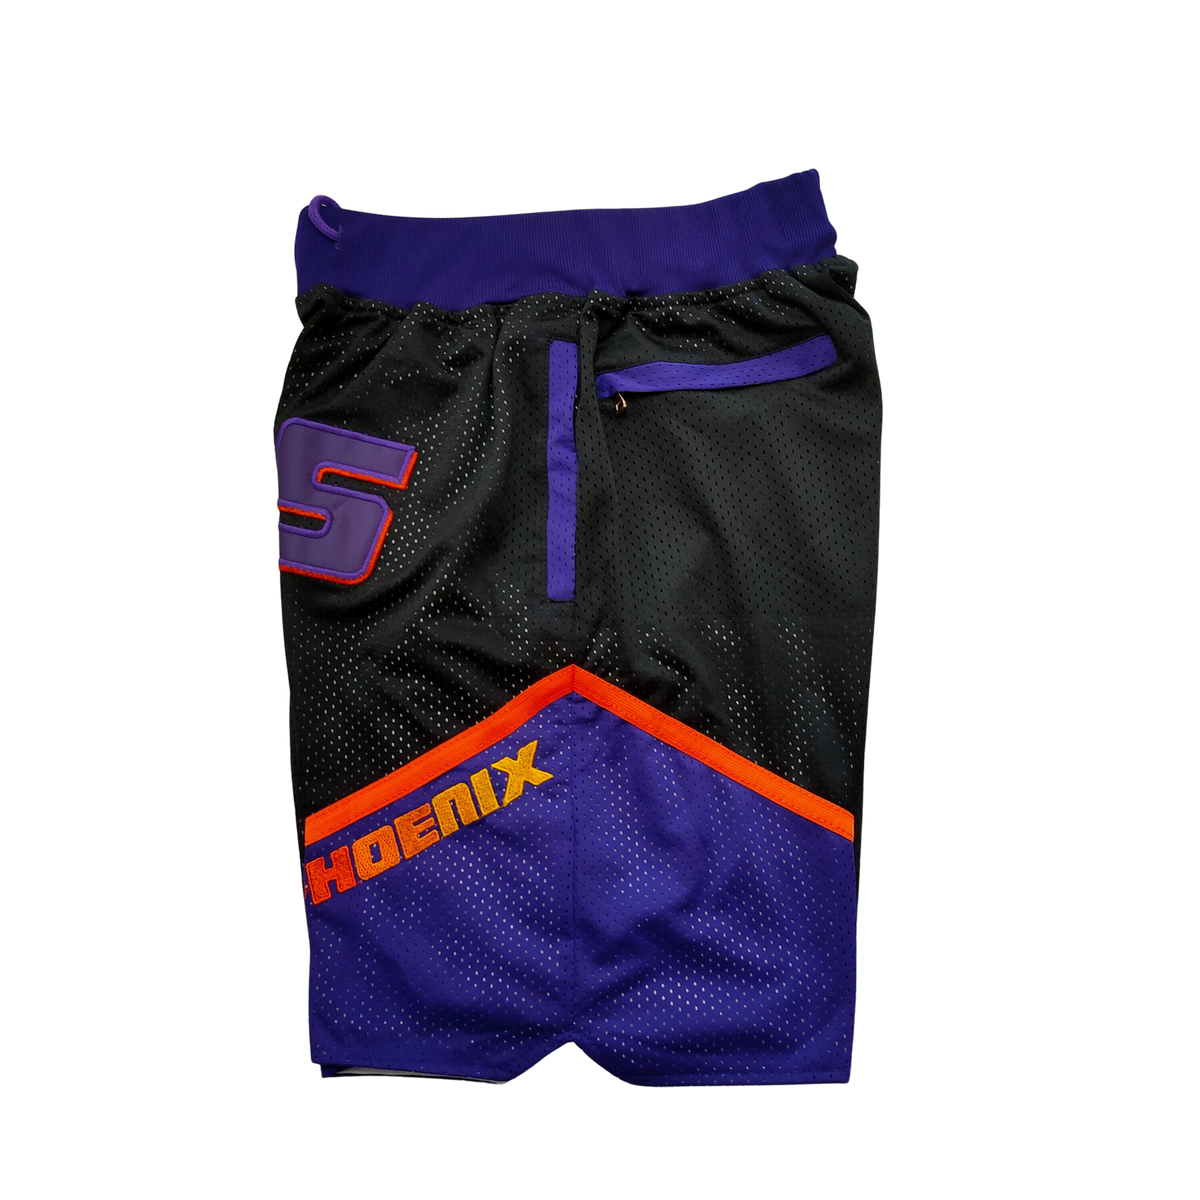 Phoenix Suns Shorts – Retro Basketball